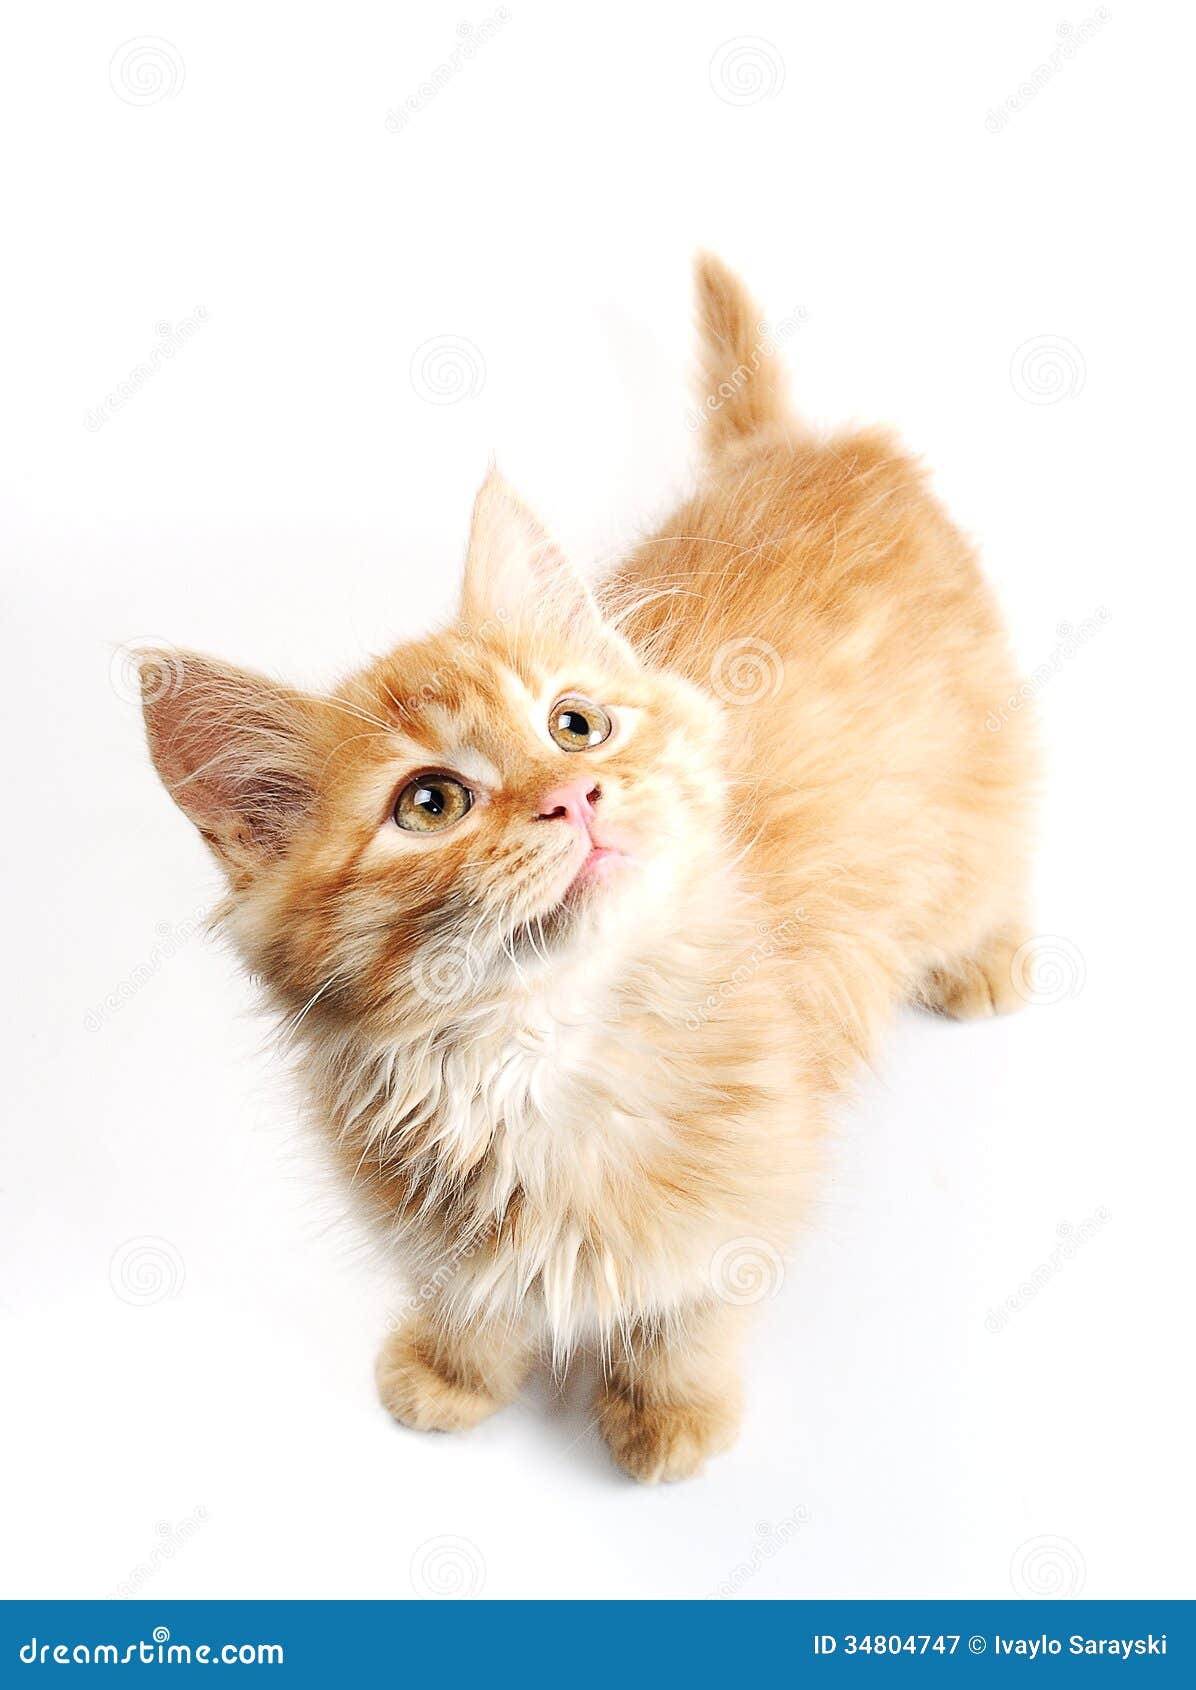 stock image. Image of background, kitten -